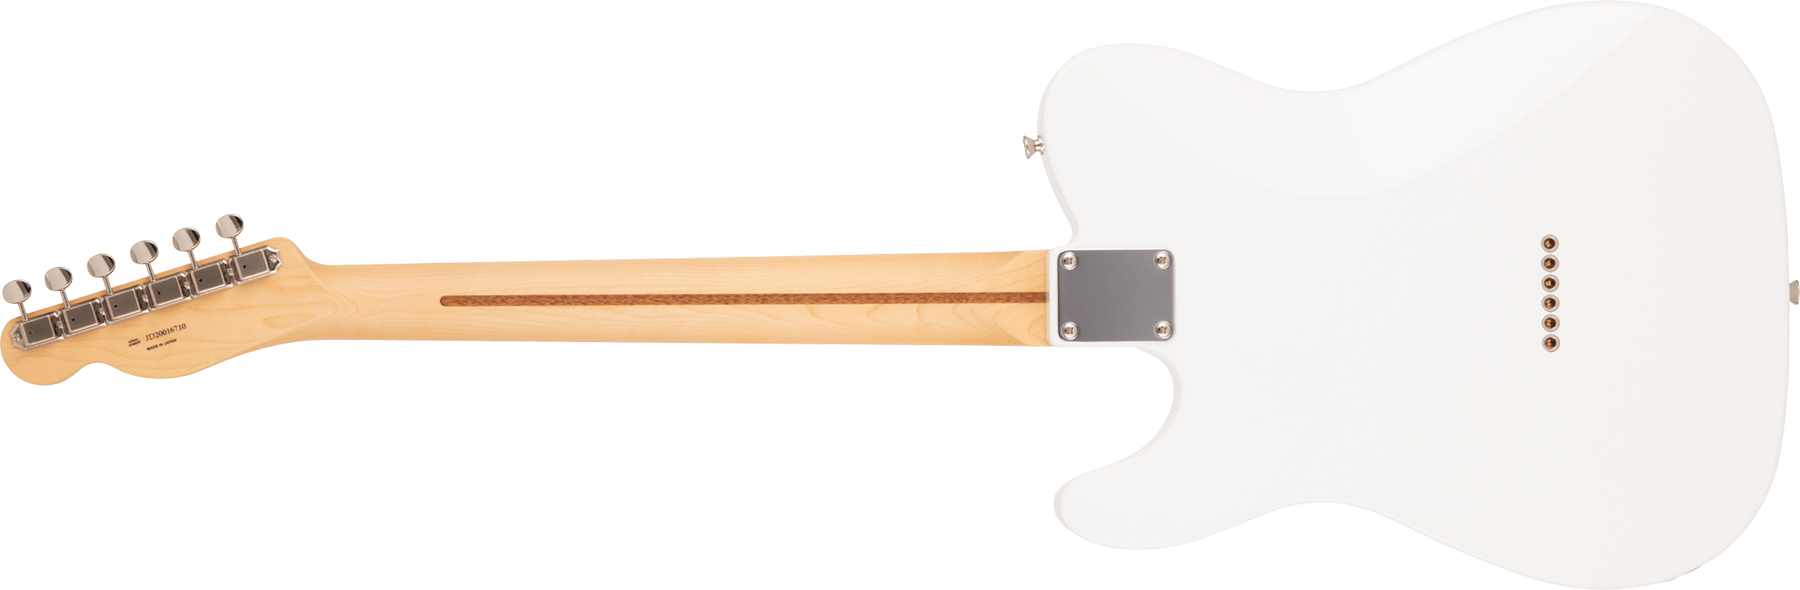 Fender Tele Hybrid Ii Jap 2s Ht Rw - Arctic White - Guitarra eléctrica con forma de tel - Variation 1